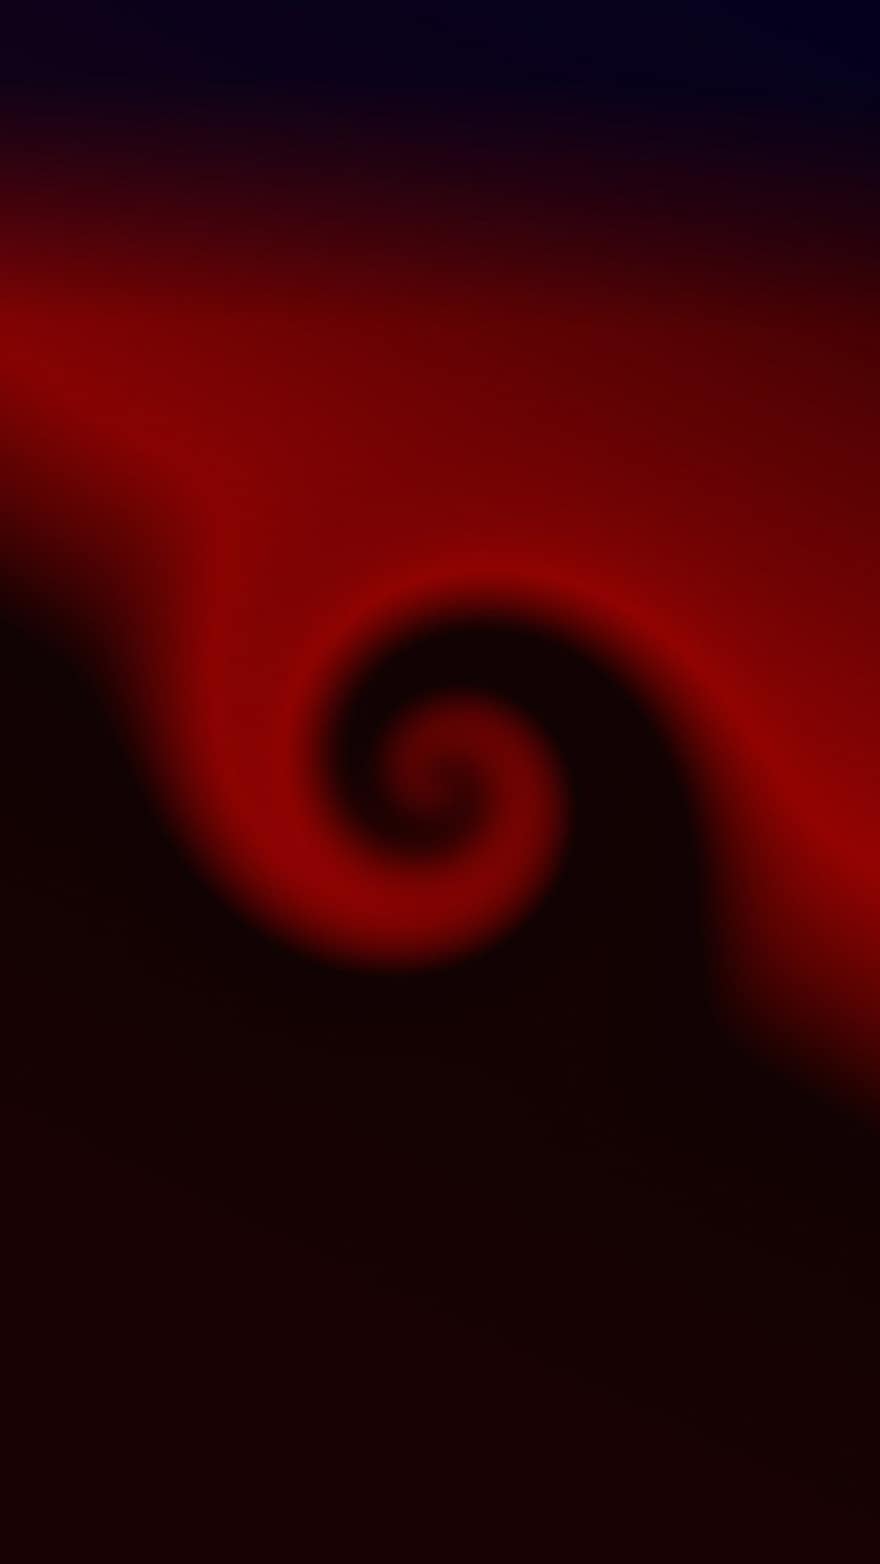 spiral, bakgrunn, svart, rød, abstrakt